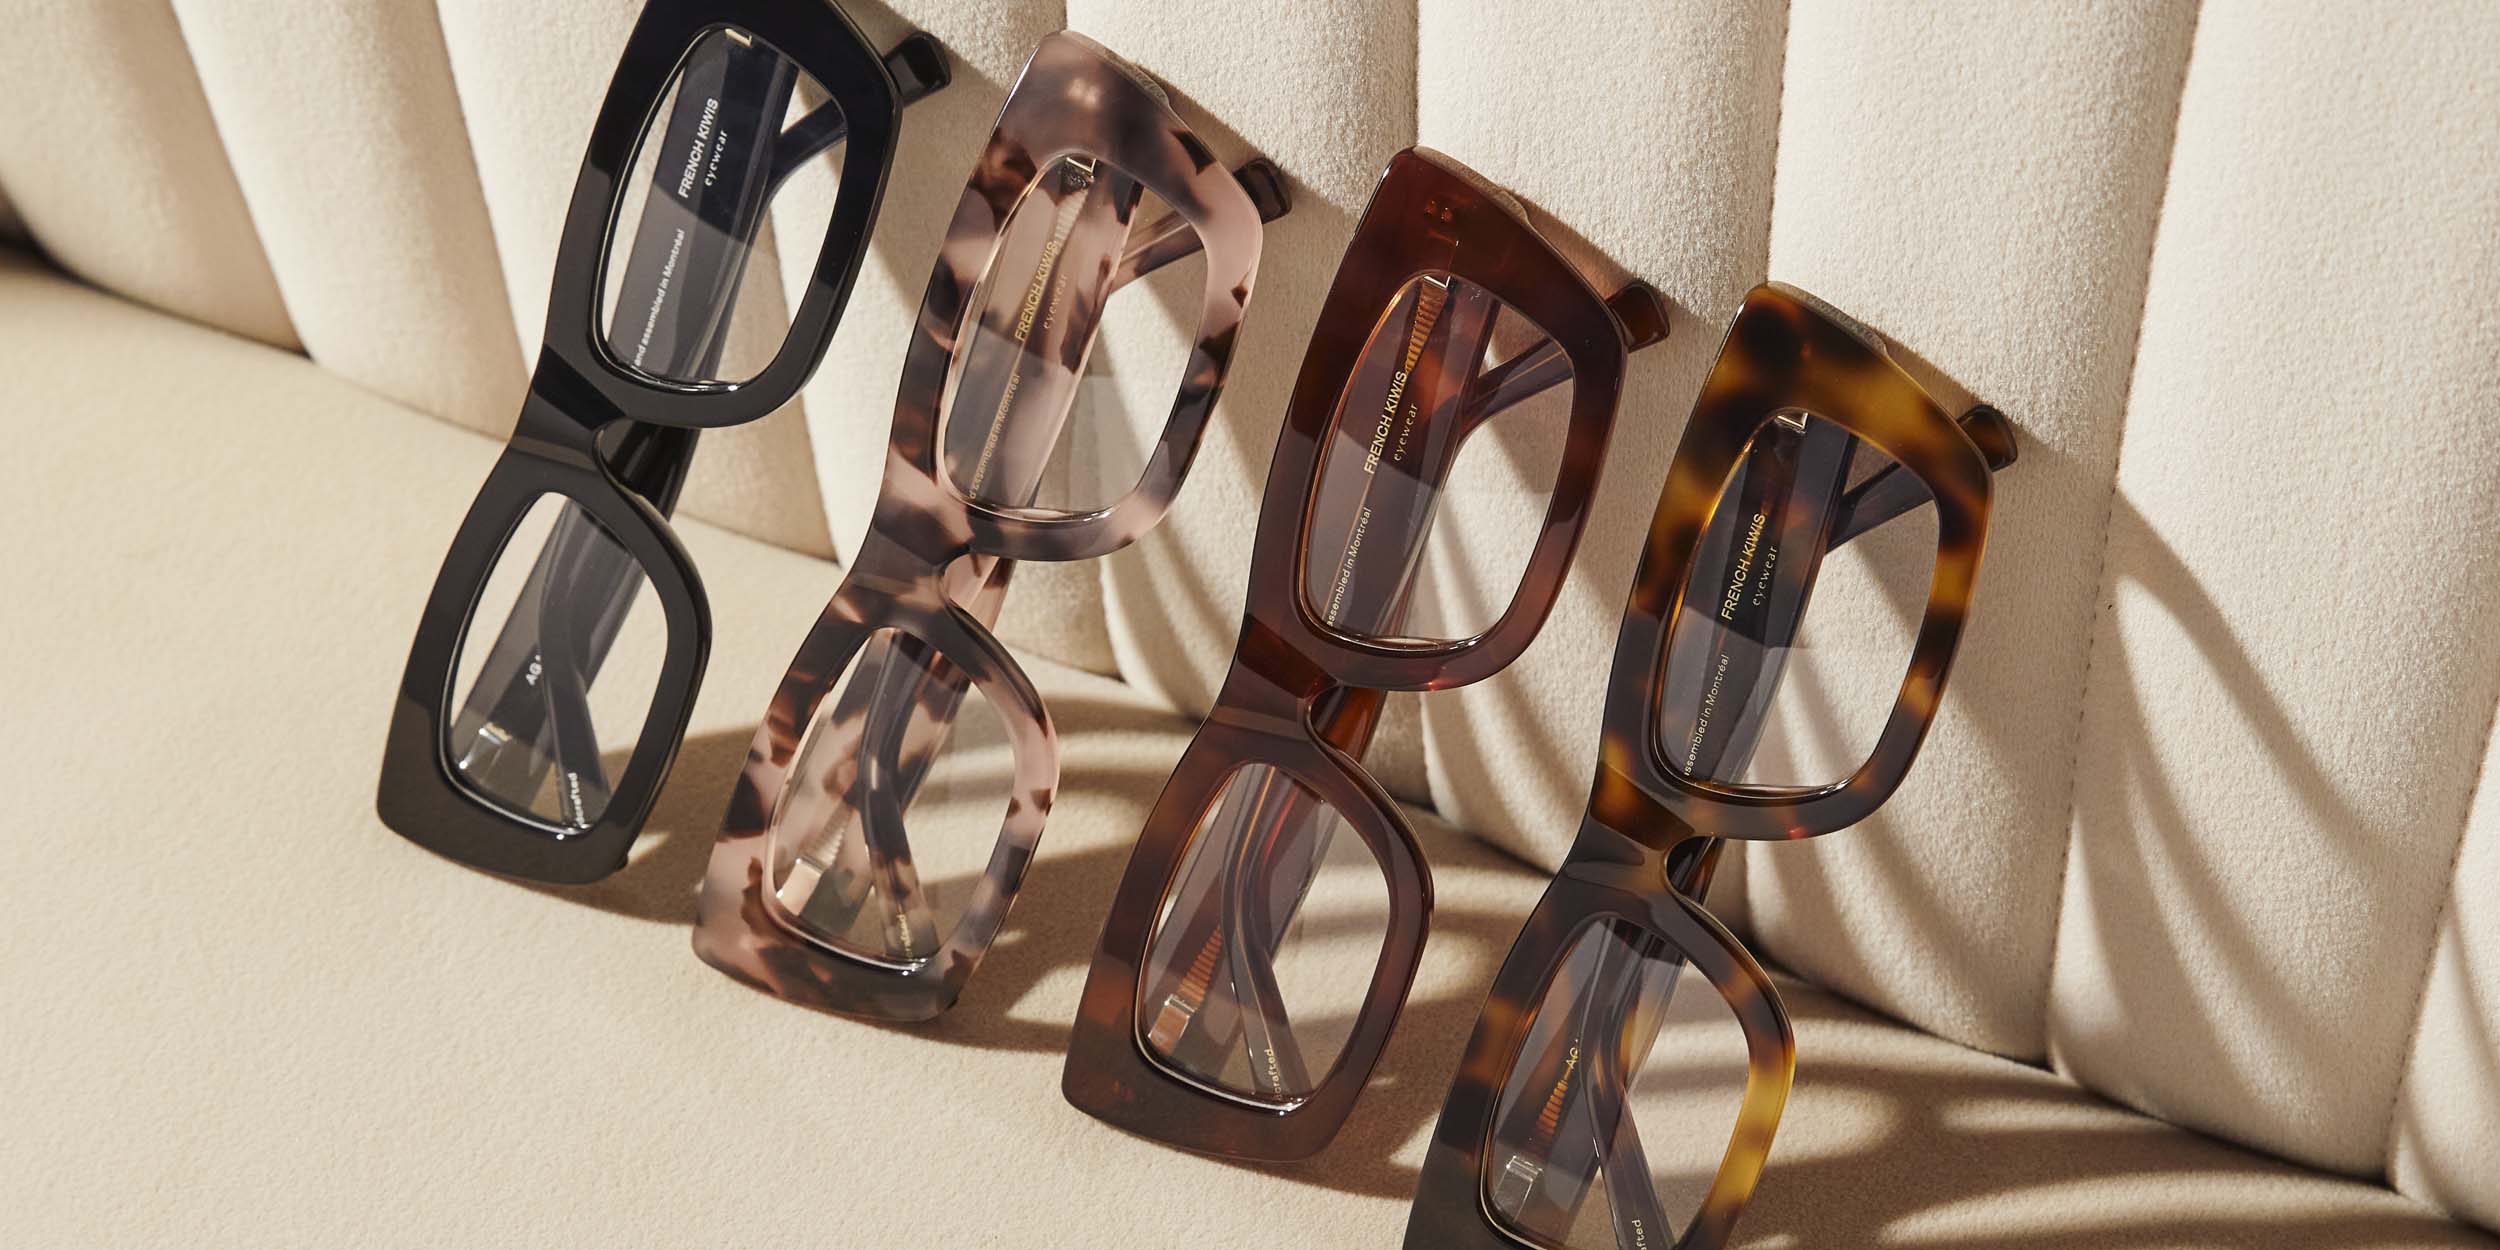 Camille reading glasses, French Kiwis, Shop Women's Reading Glasses  Online